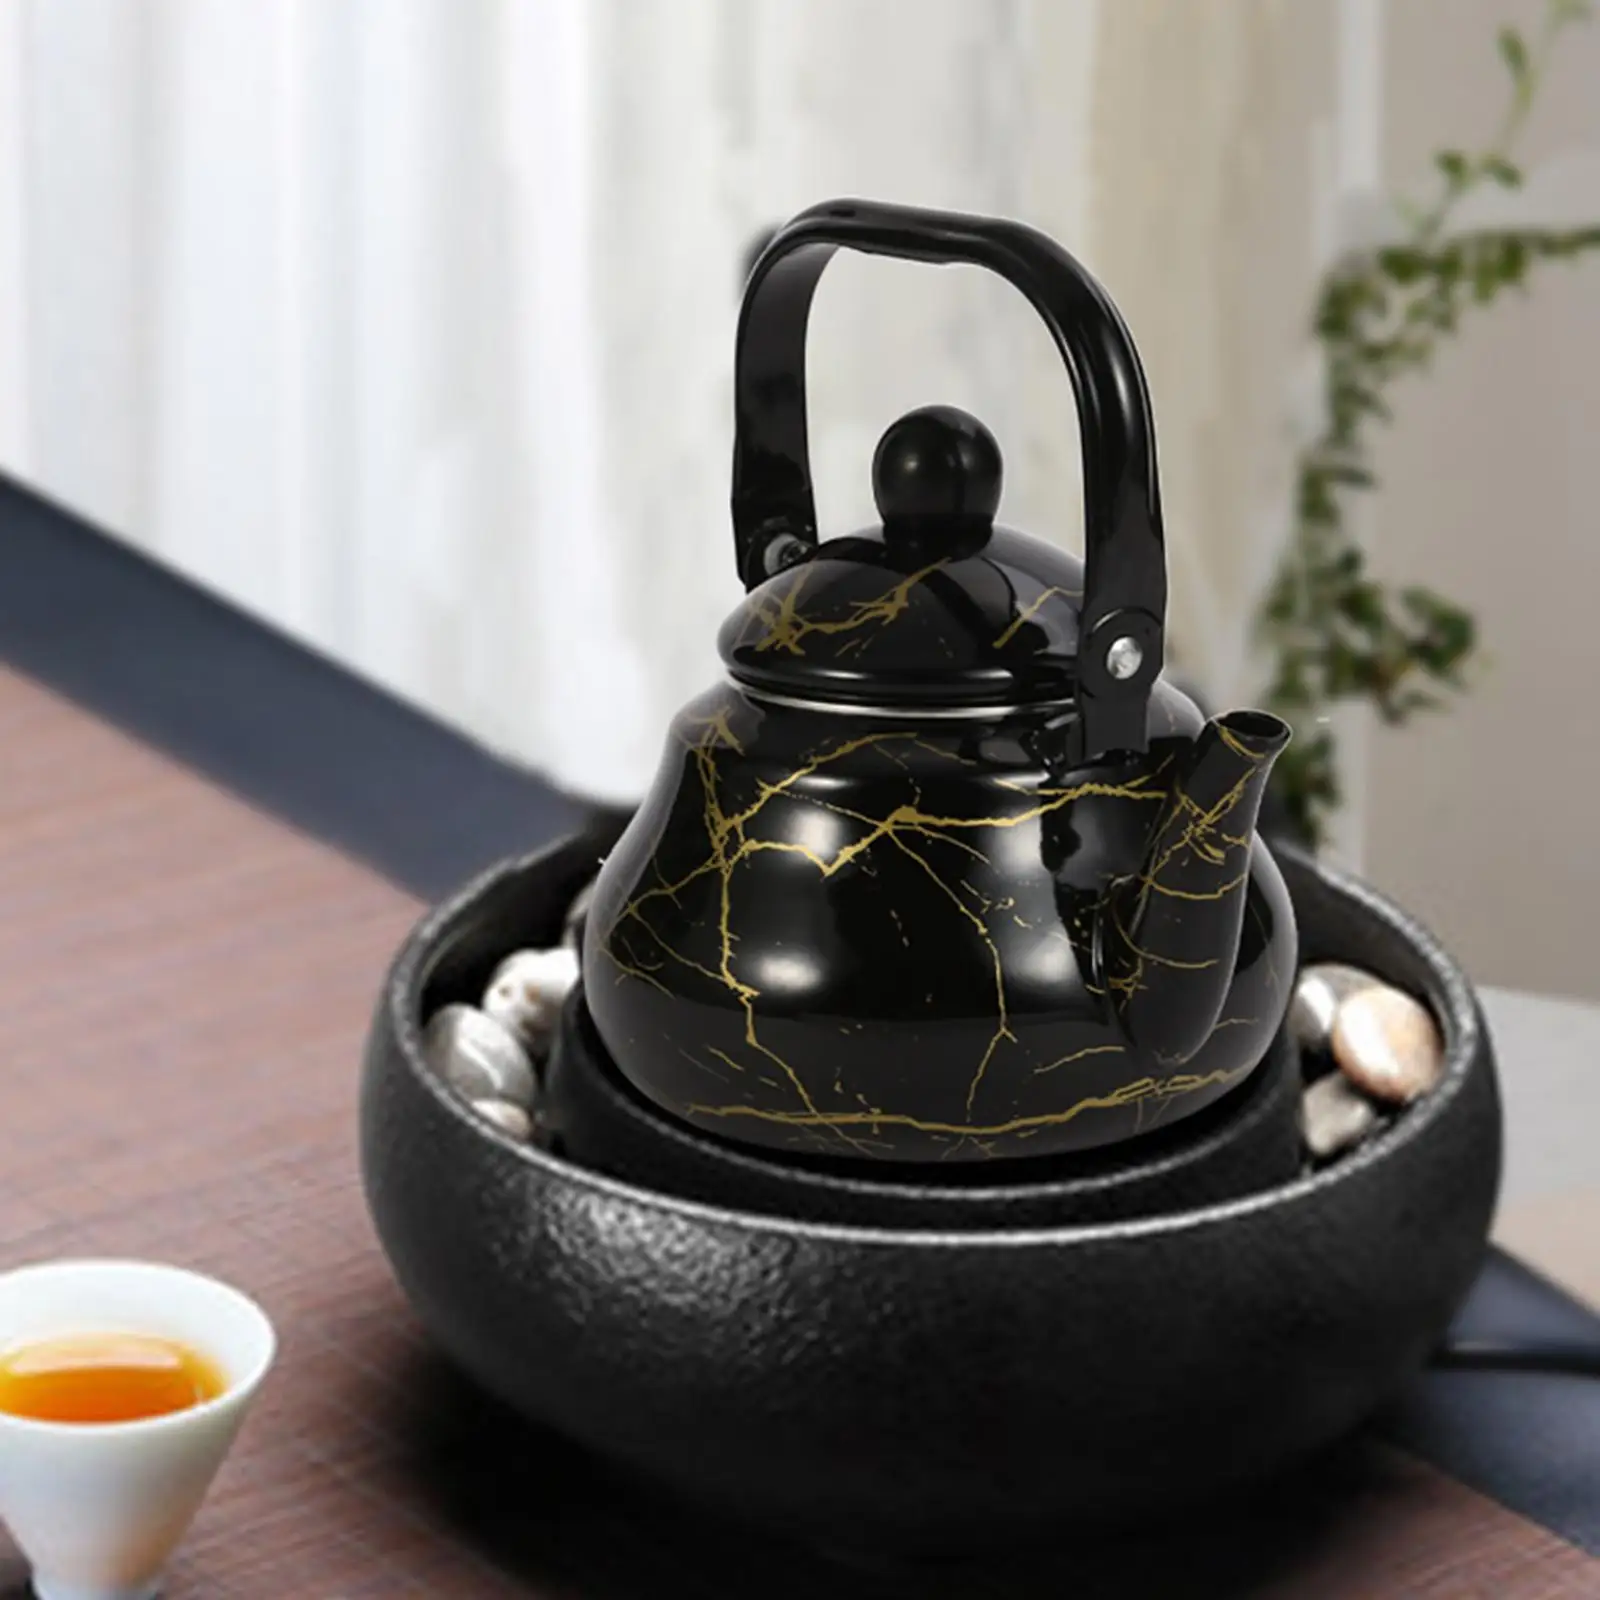 Large Capacity Teakettle Teapots Portable Pot for Home Kitchen Restaurant Picnic